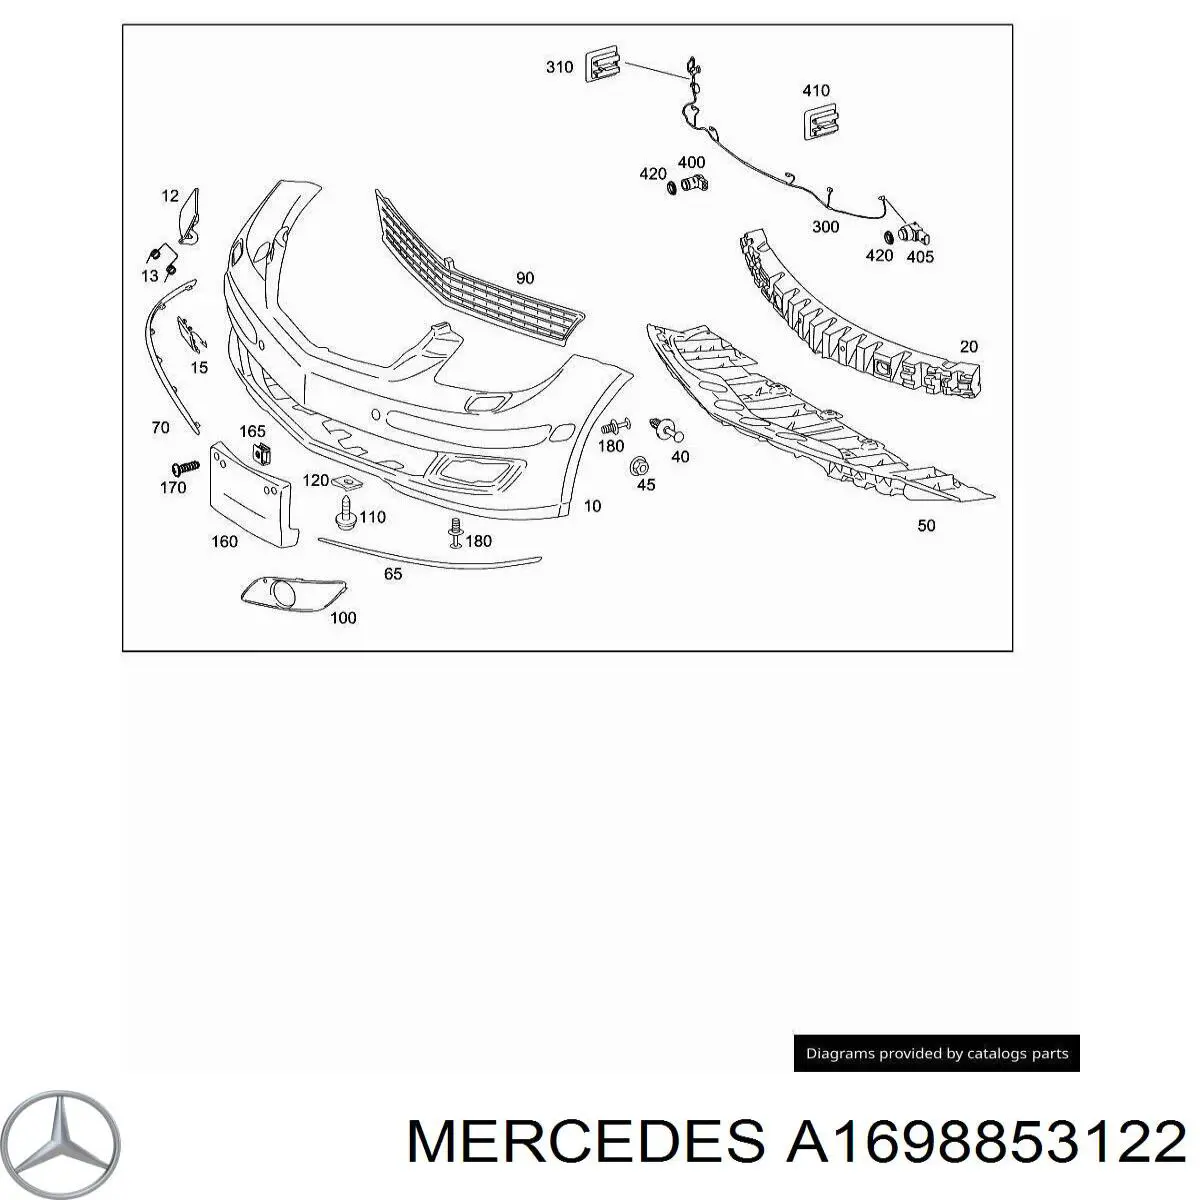 A16988531229999 Mercedes